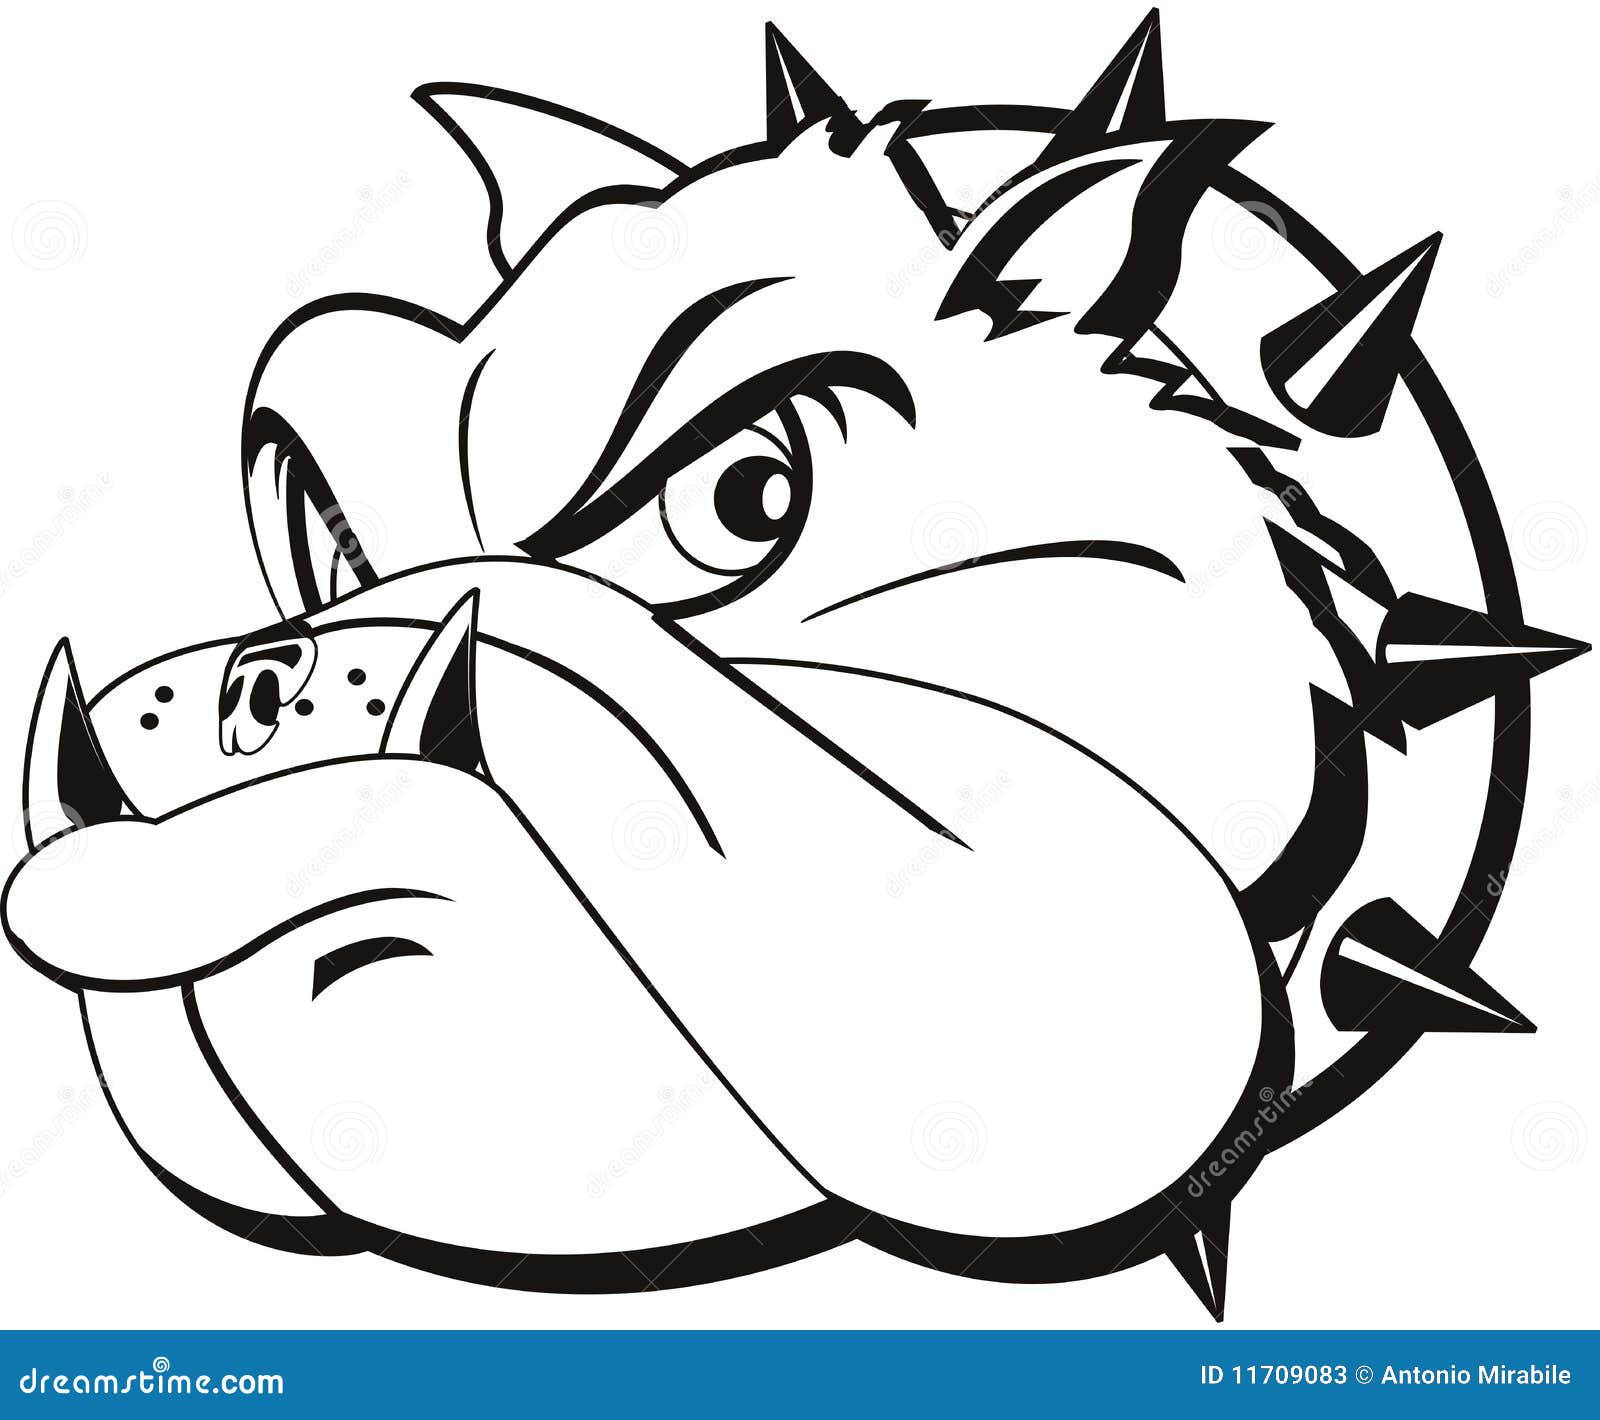 100 Bulldog Tattoo Designs Backgrounds Illustrations RoyaltyFree Vector  Graphics  Clip Art  iStock